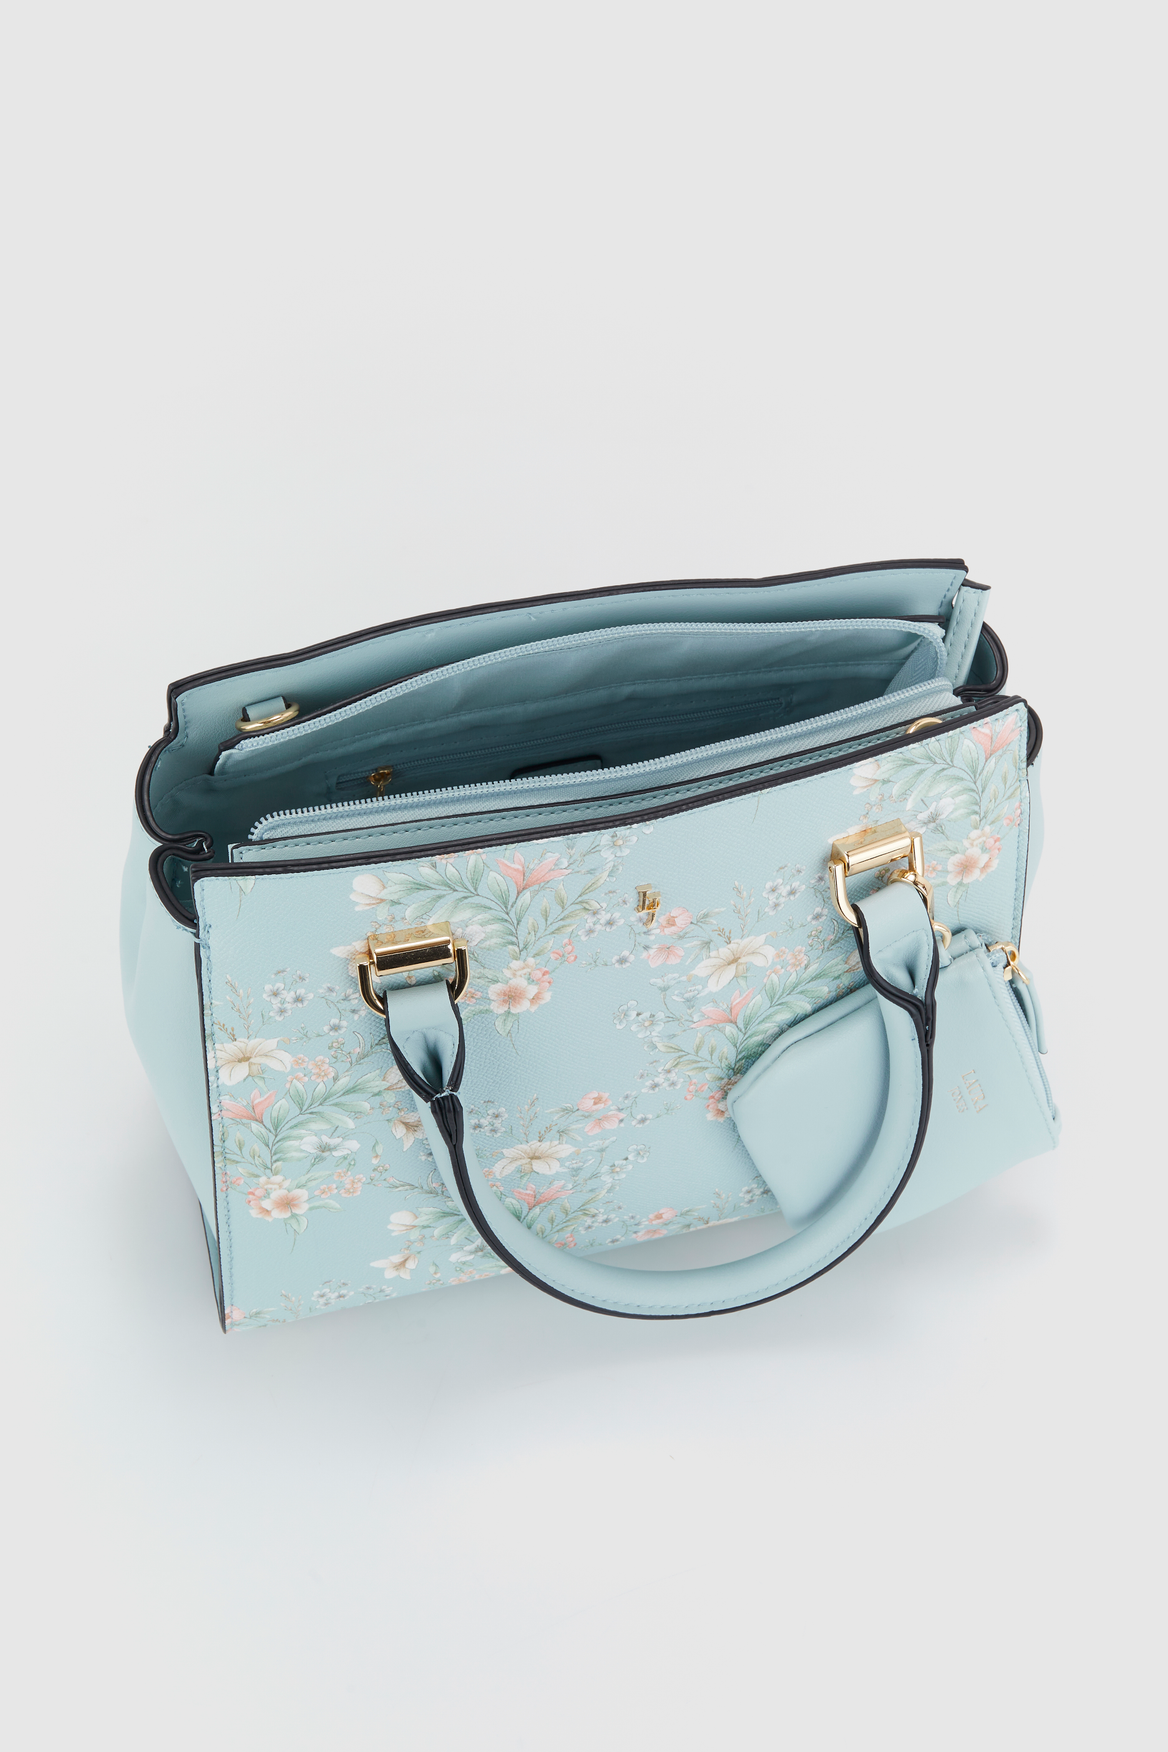 Fiorelli Women's Faux Leather Exterior Bags & Handbags for sale | eBay